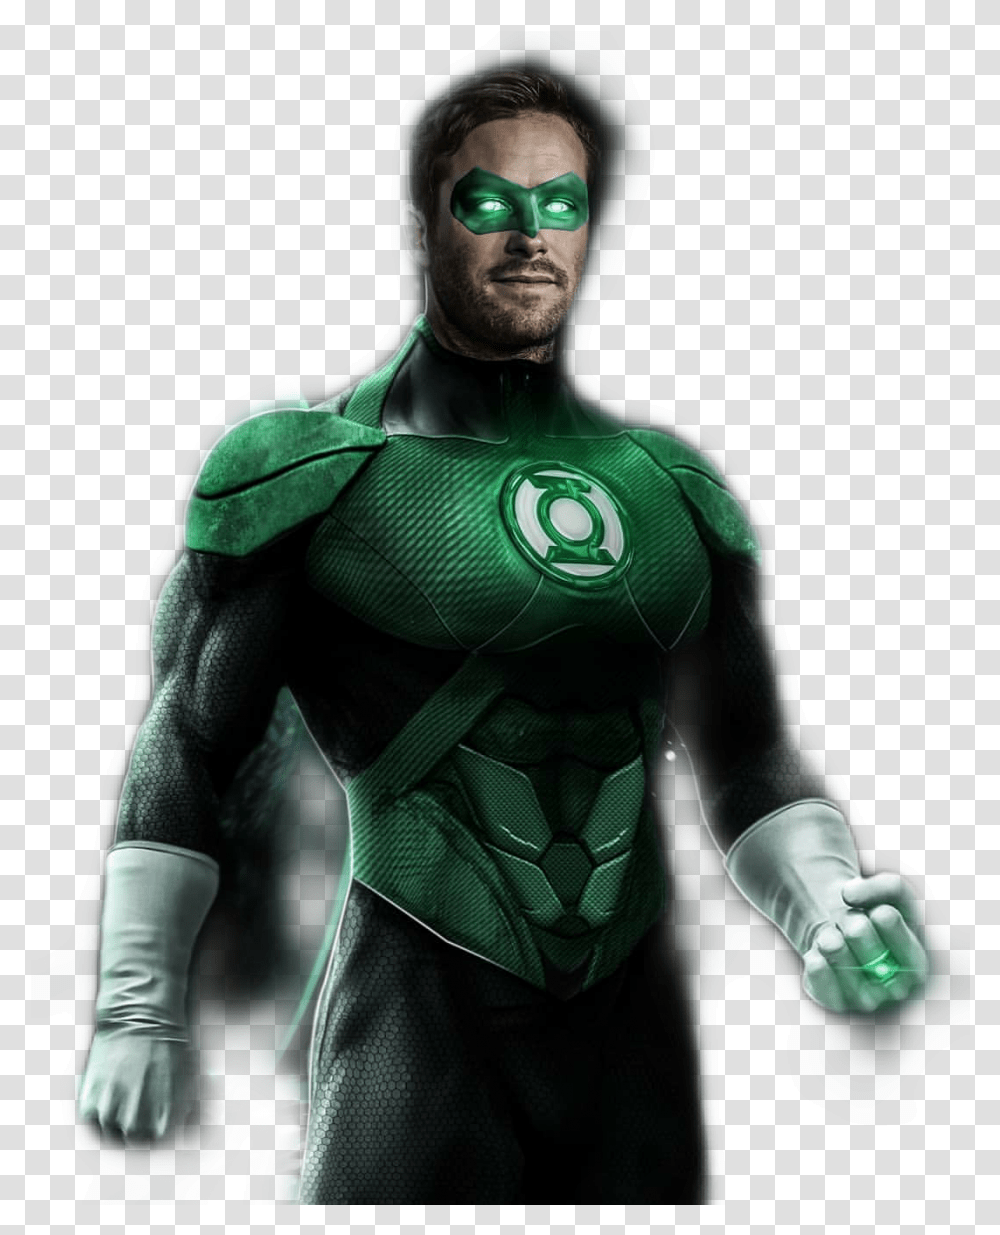 Greenlantern Haljordan Armiehammer Armie Hammer Green Lantern, Sunglasses, Accessories, Person, Clothing Transparent Png